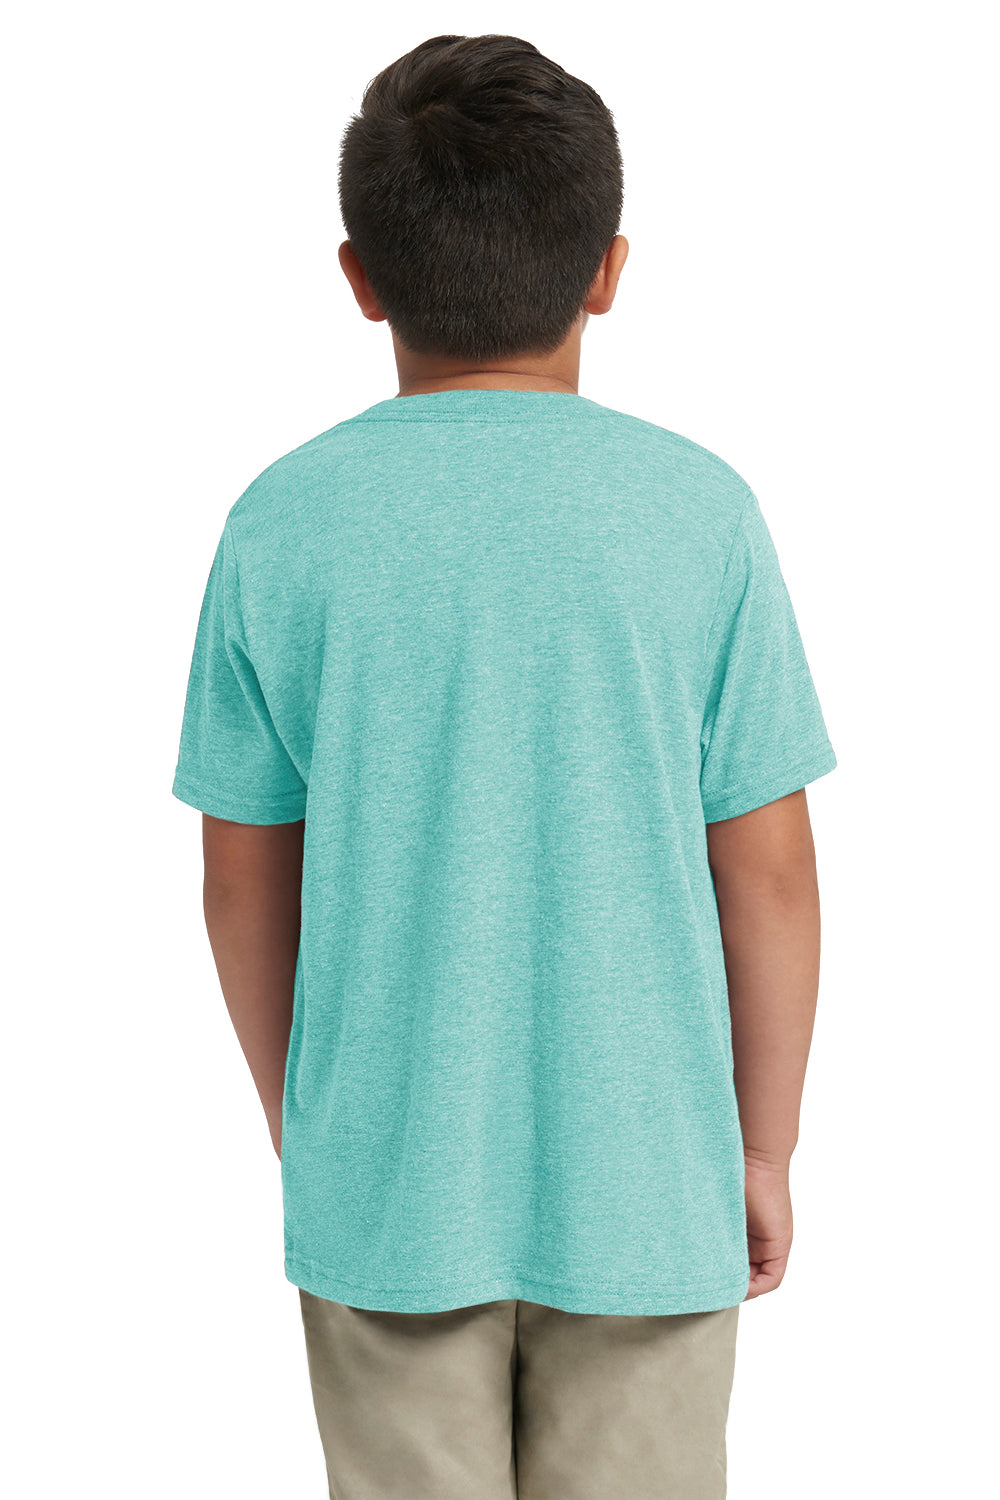 Next Level N6310 Jersey Short Sleeve Crewneck T-Shirt Tahiti Blue Back